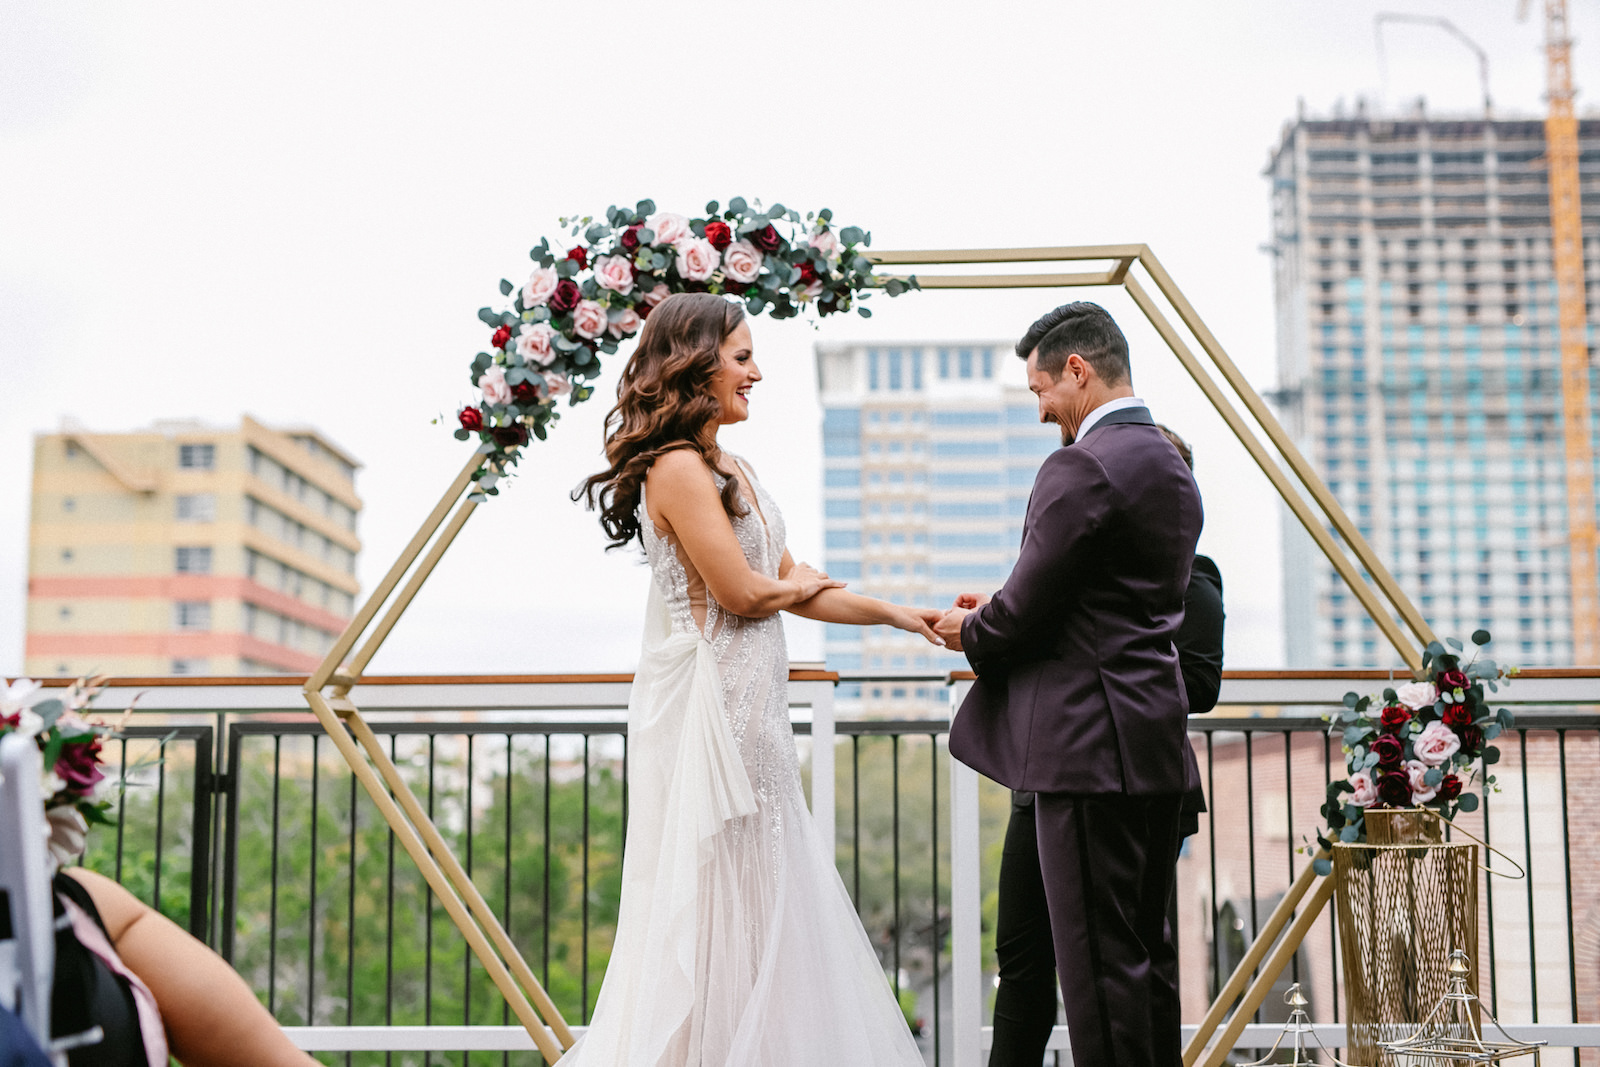 Bride and Groom Exchange Vows | Outdoor Rooftop Wedding Ceremony | St. Pete Florida Wedding Venue Red Mesa